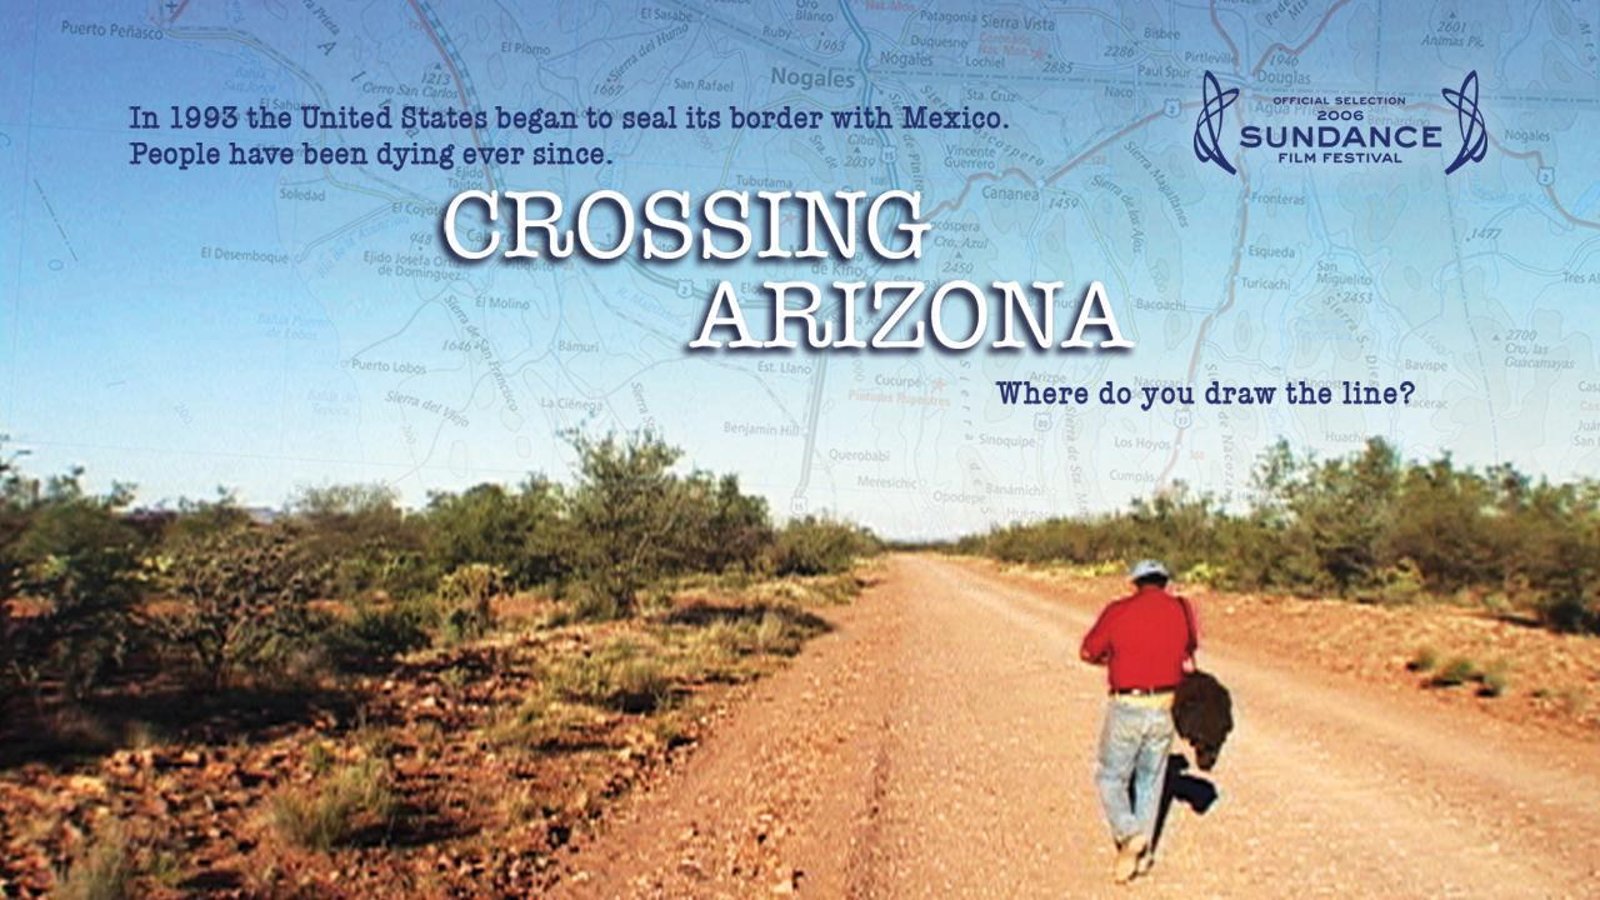 Crossing Arizona - The Immigration Crisis in Arizona